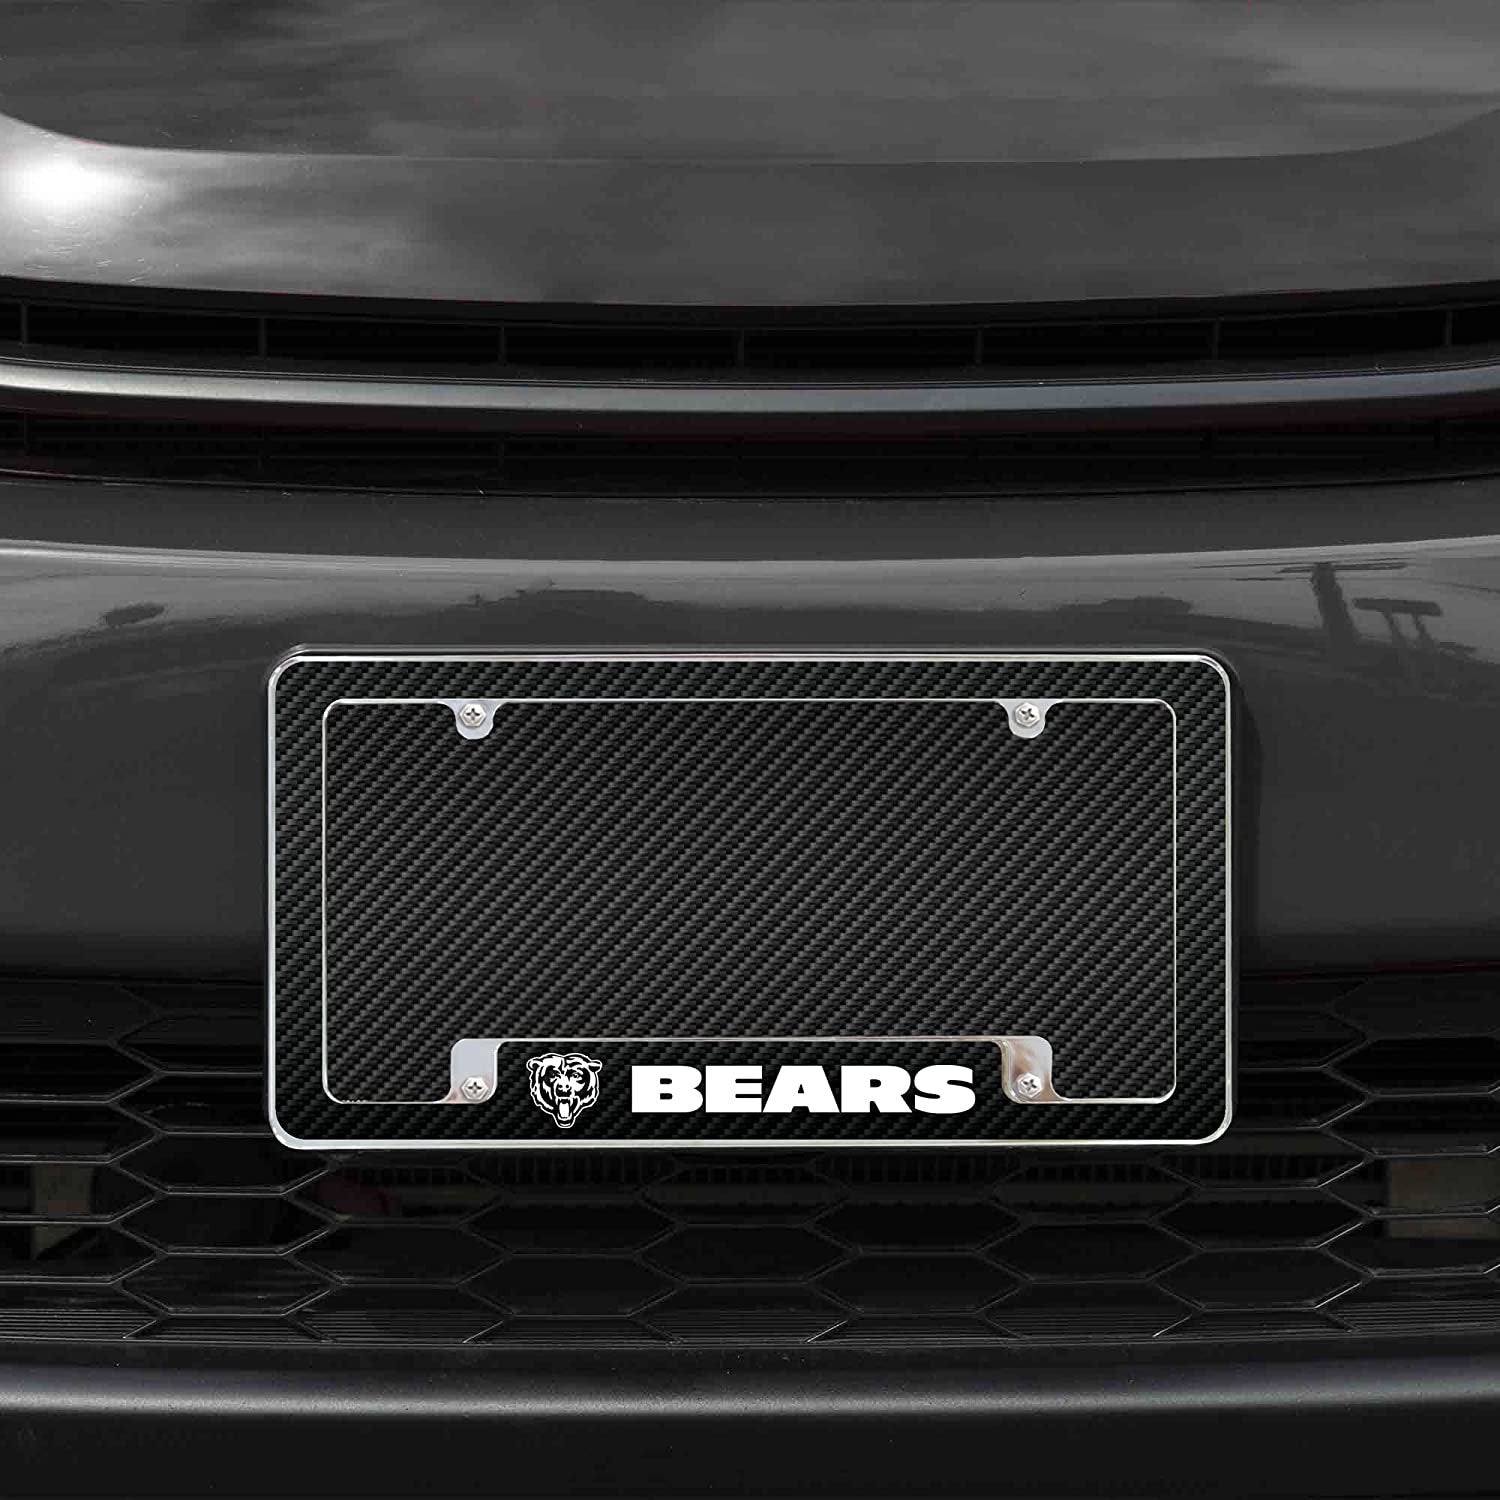 Chicago Bears Metal License Plate Frame Chrome Tag Cover Carbon Fiber Design 6x12 Inch